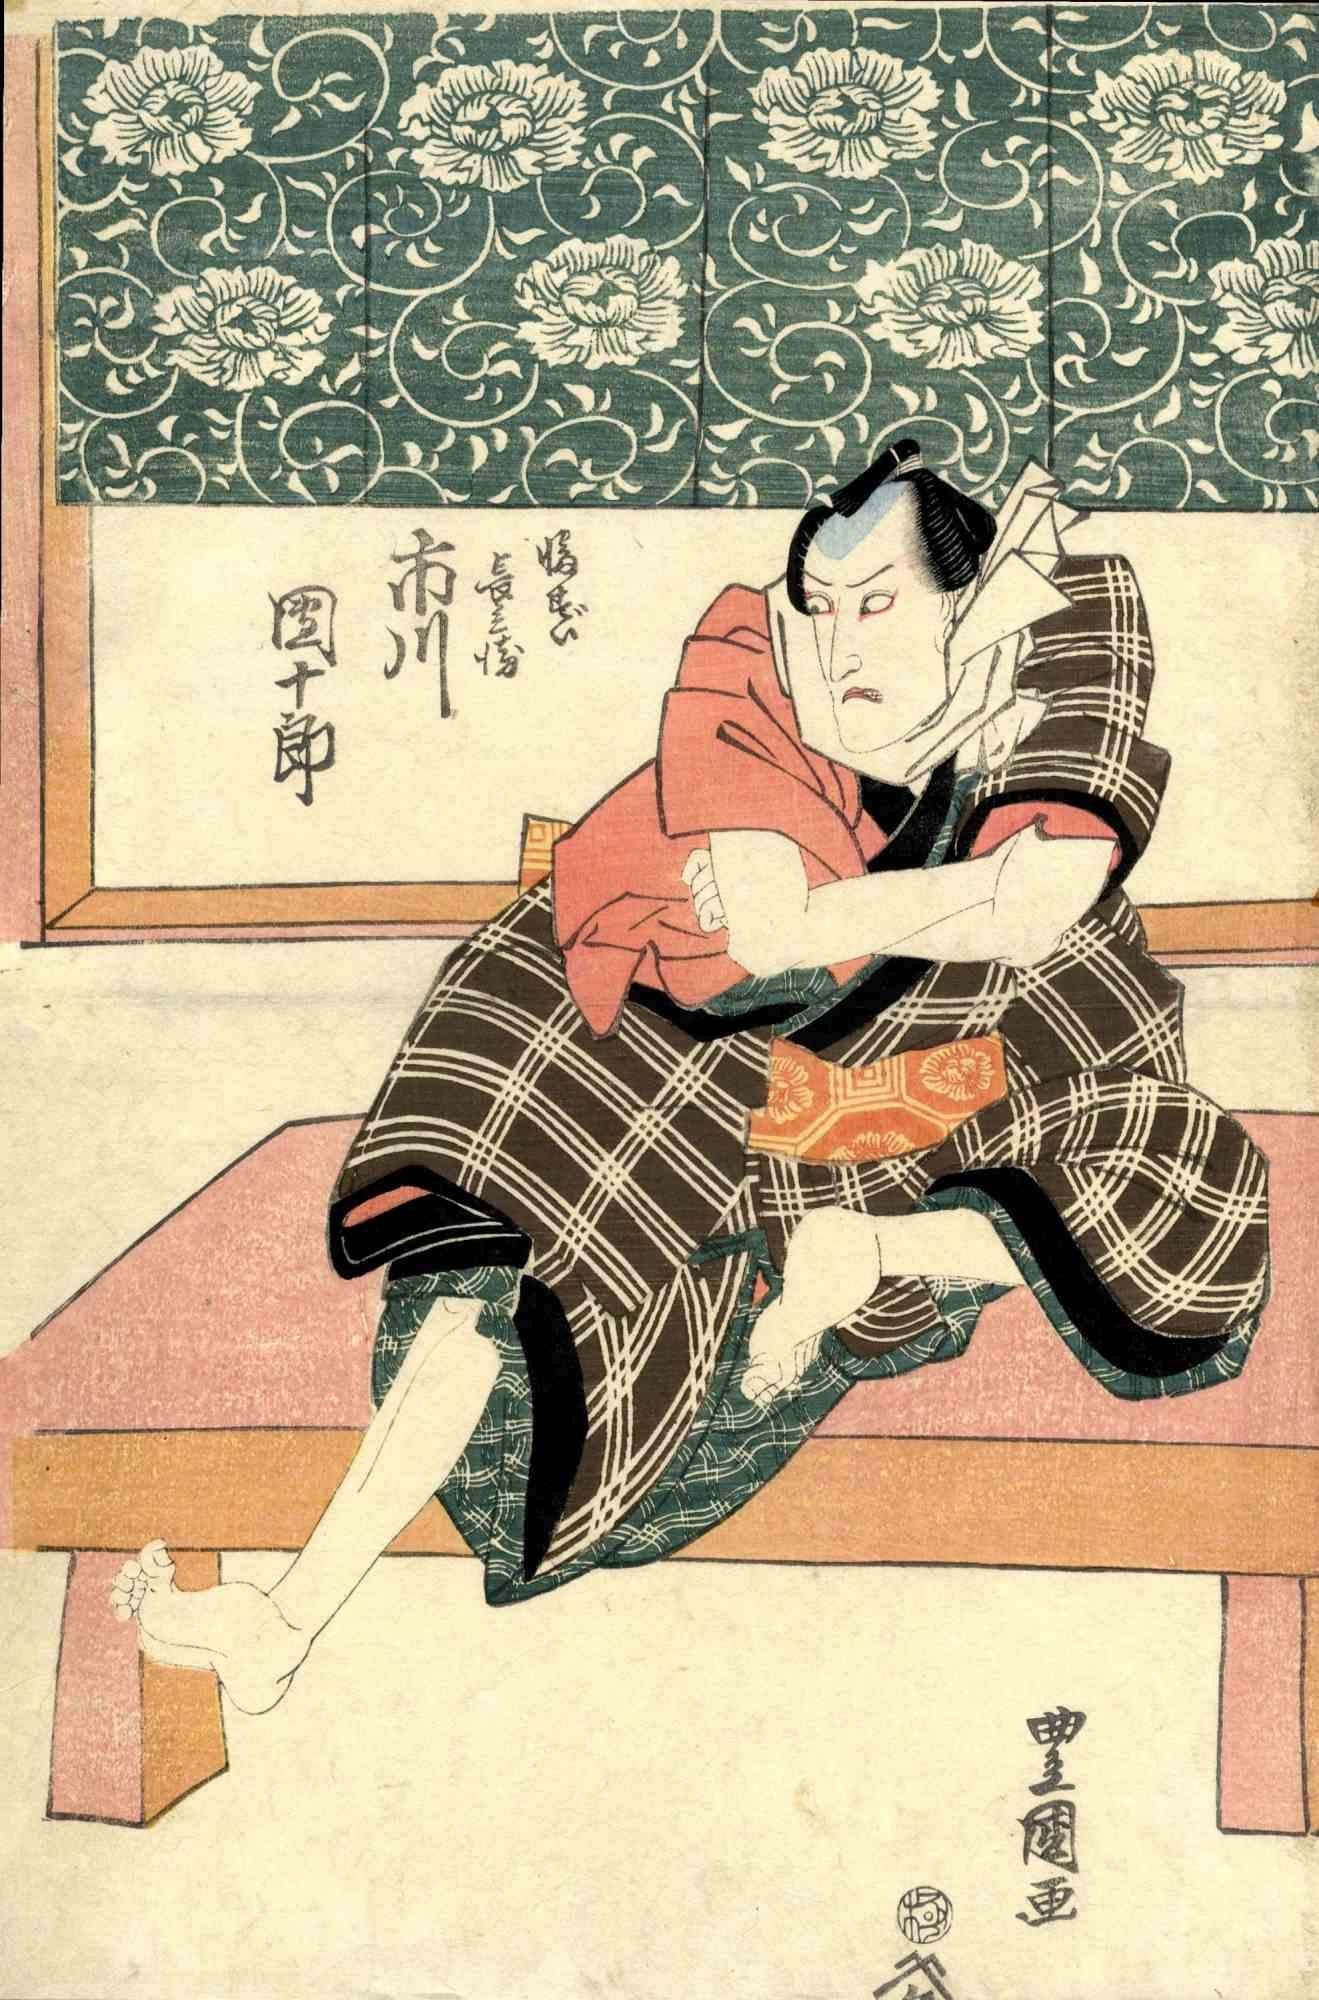 Utagawa Toyokuni I Figurative Print - Ichikawa Danjuro in the Role of Chobei - Woodcut by Utagawa Toyokuni  - 1810s